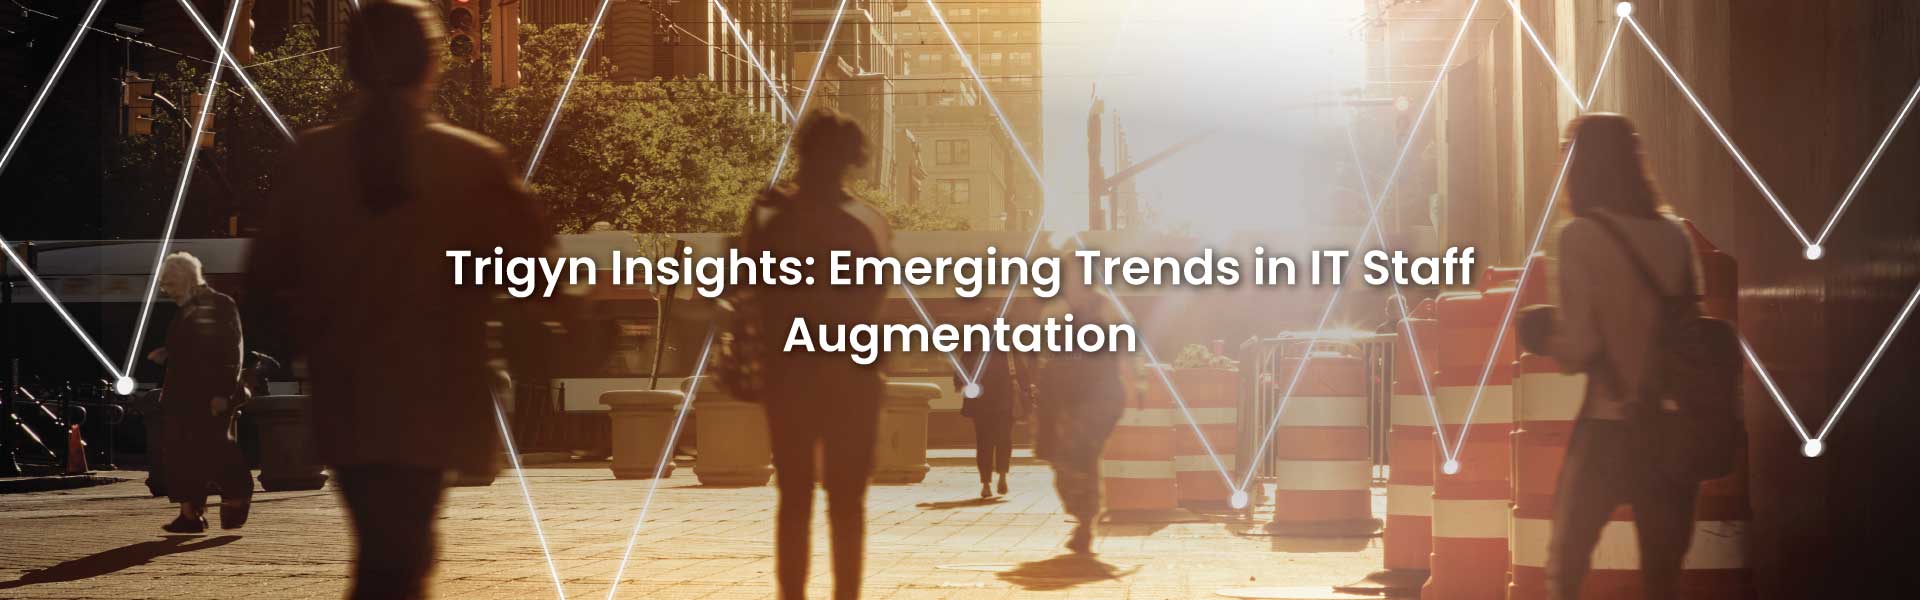 Staff Augmentation: Emerging Trends